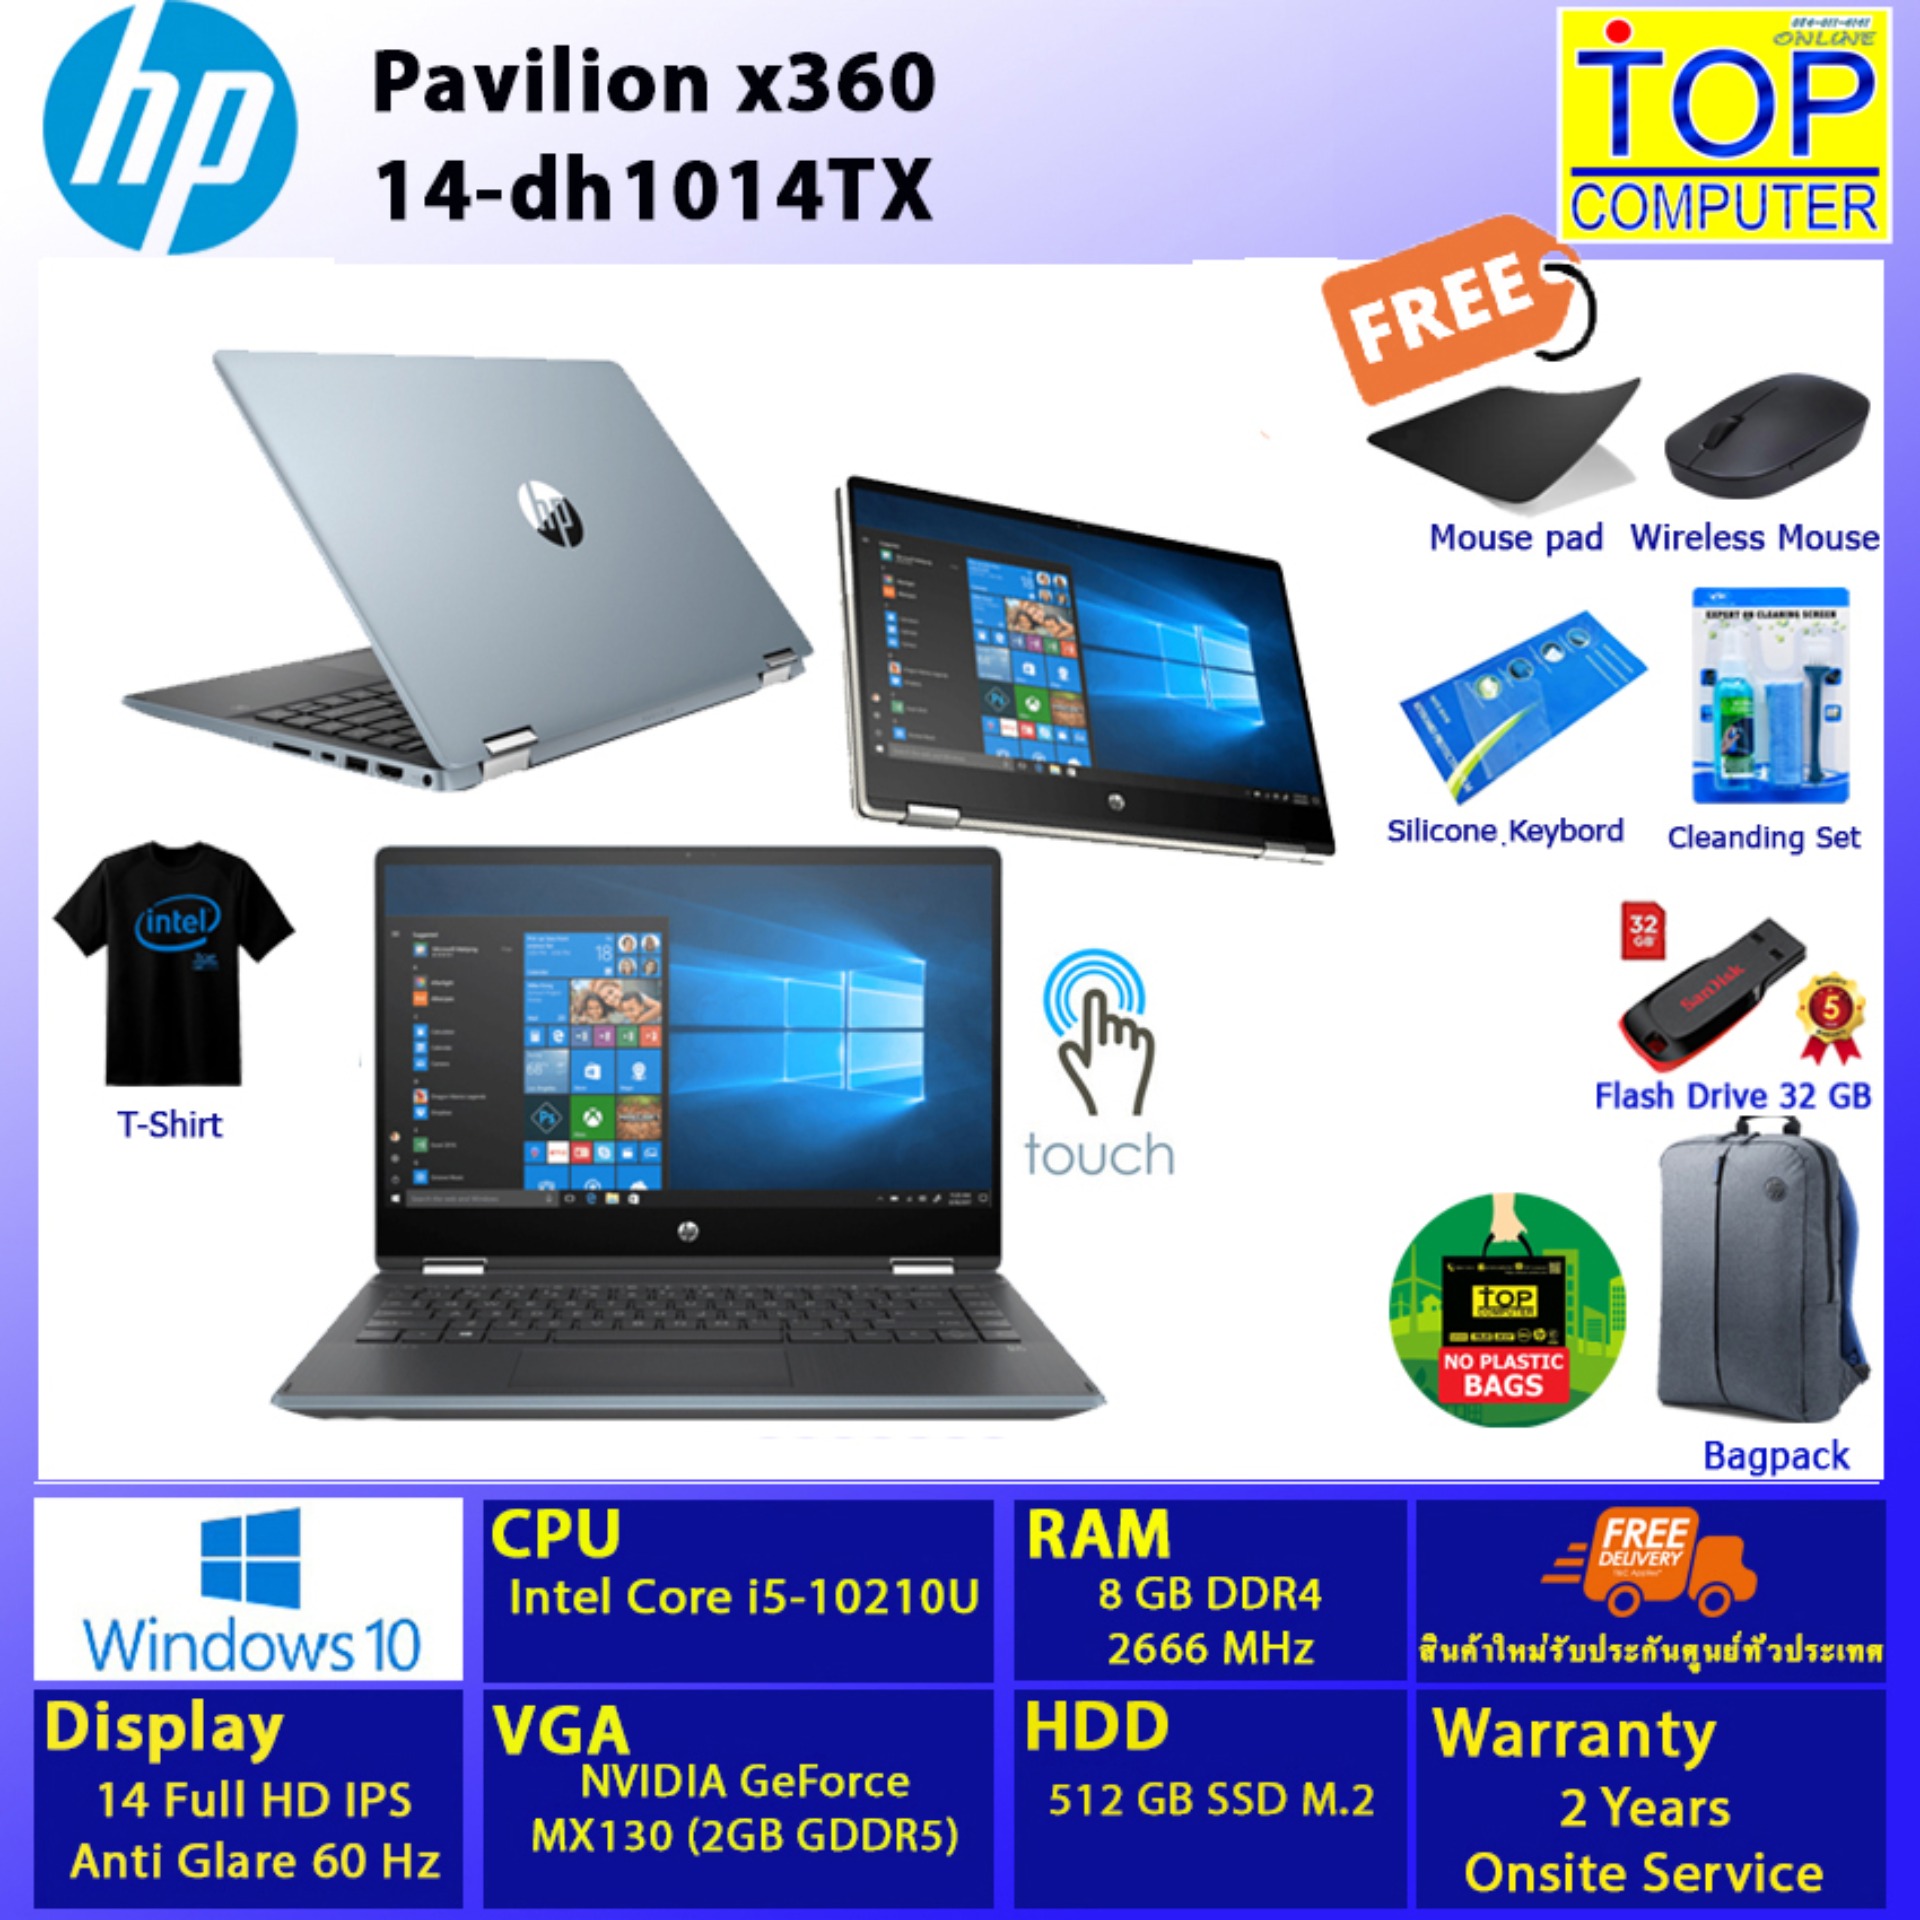 HP Pavilion x360 14-dh1014TX/i5-10210U/8GB/512GB SSD/GeForce MX130 2GB/14.0 FHD Touch/Win10Home/Cloud blue/By Top Computer